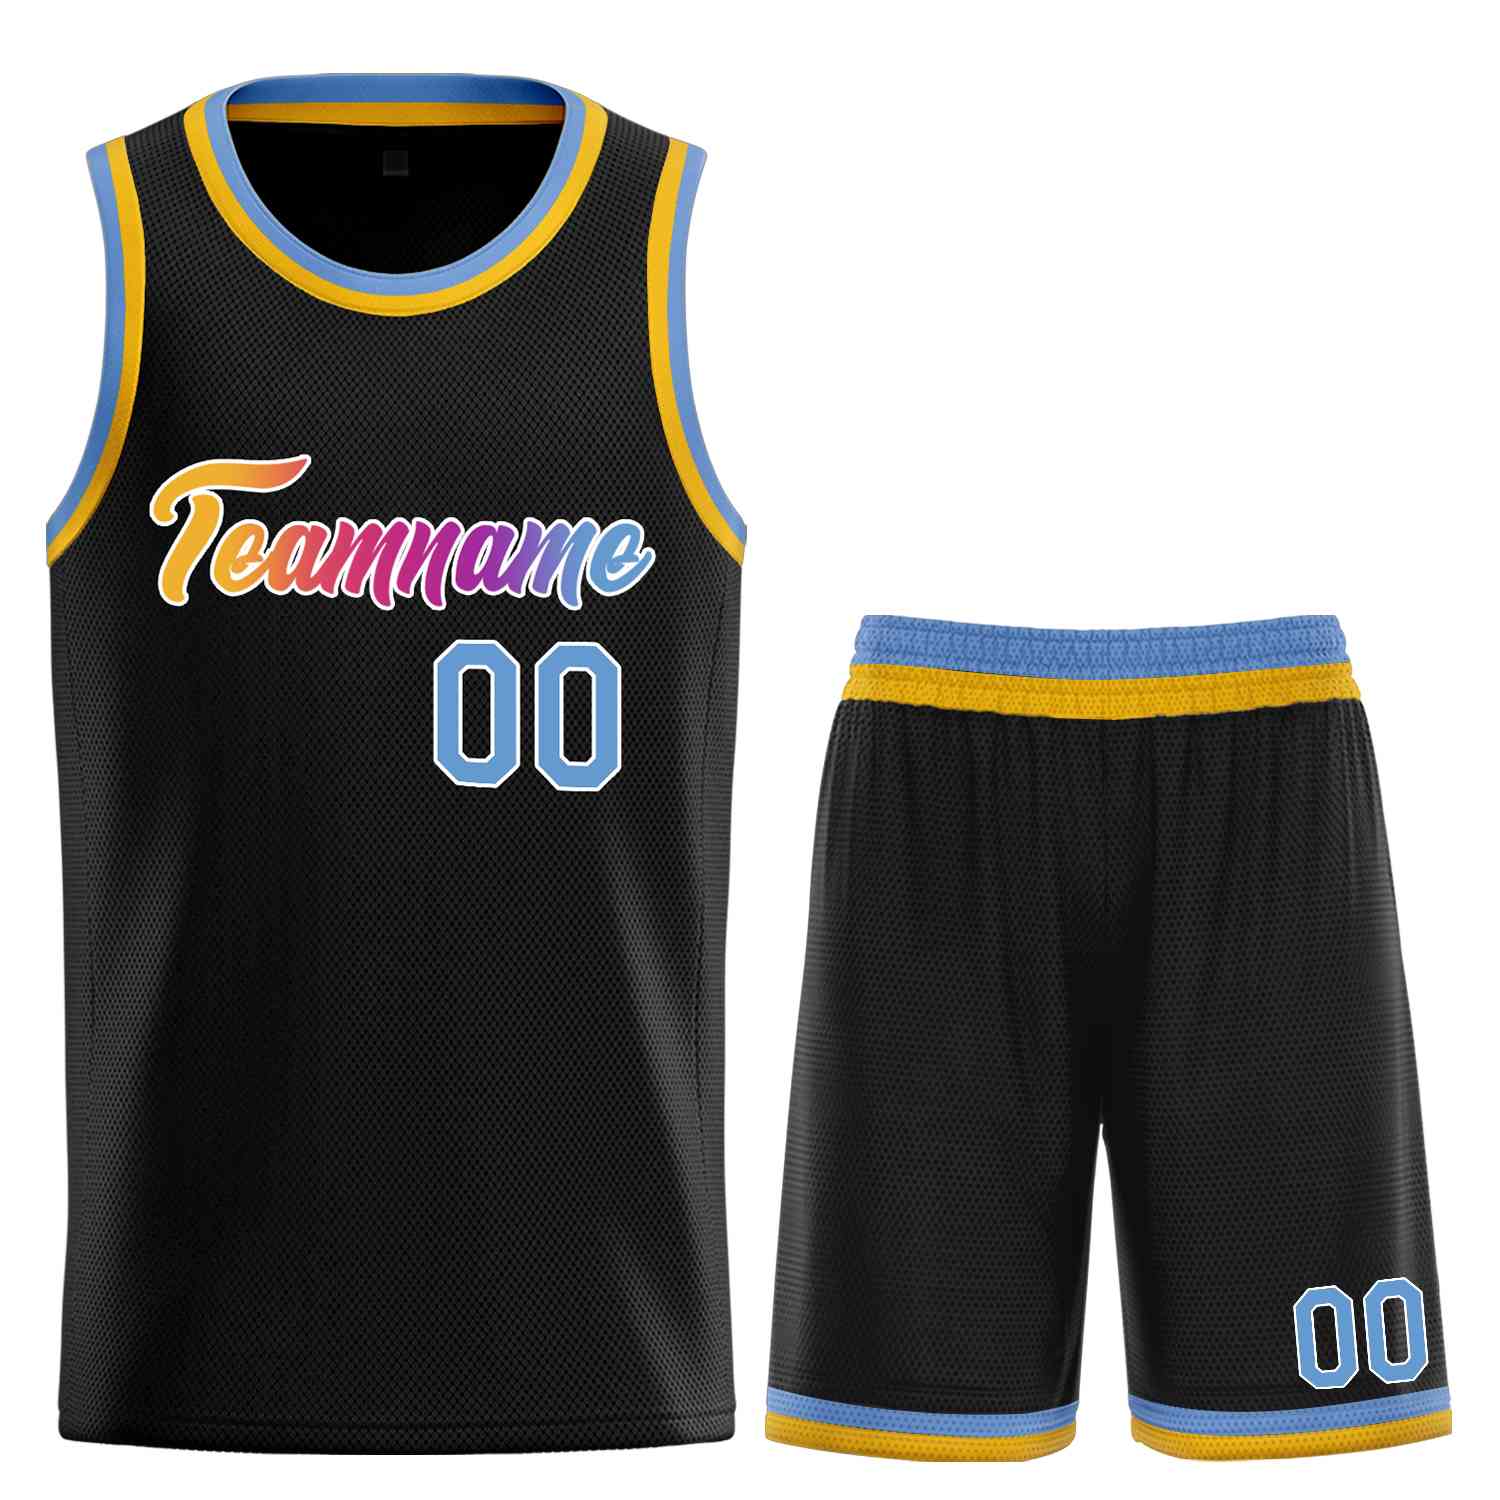 FANSIDEA Custom Basketball Jersey Cream Black Round Neck Sublimation Basketball Suit Jersey Men's Size:M